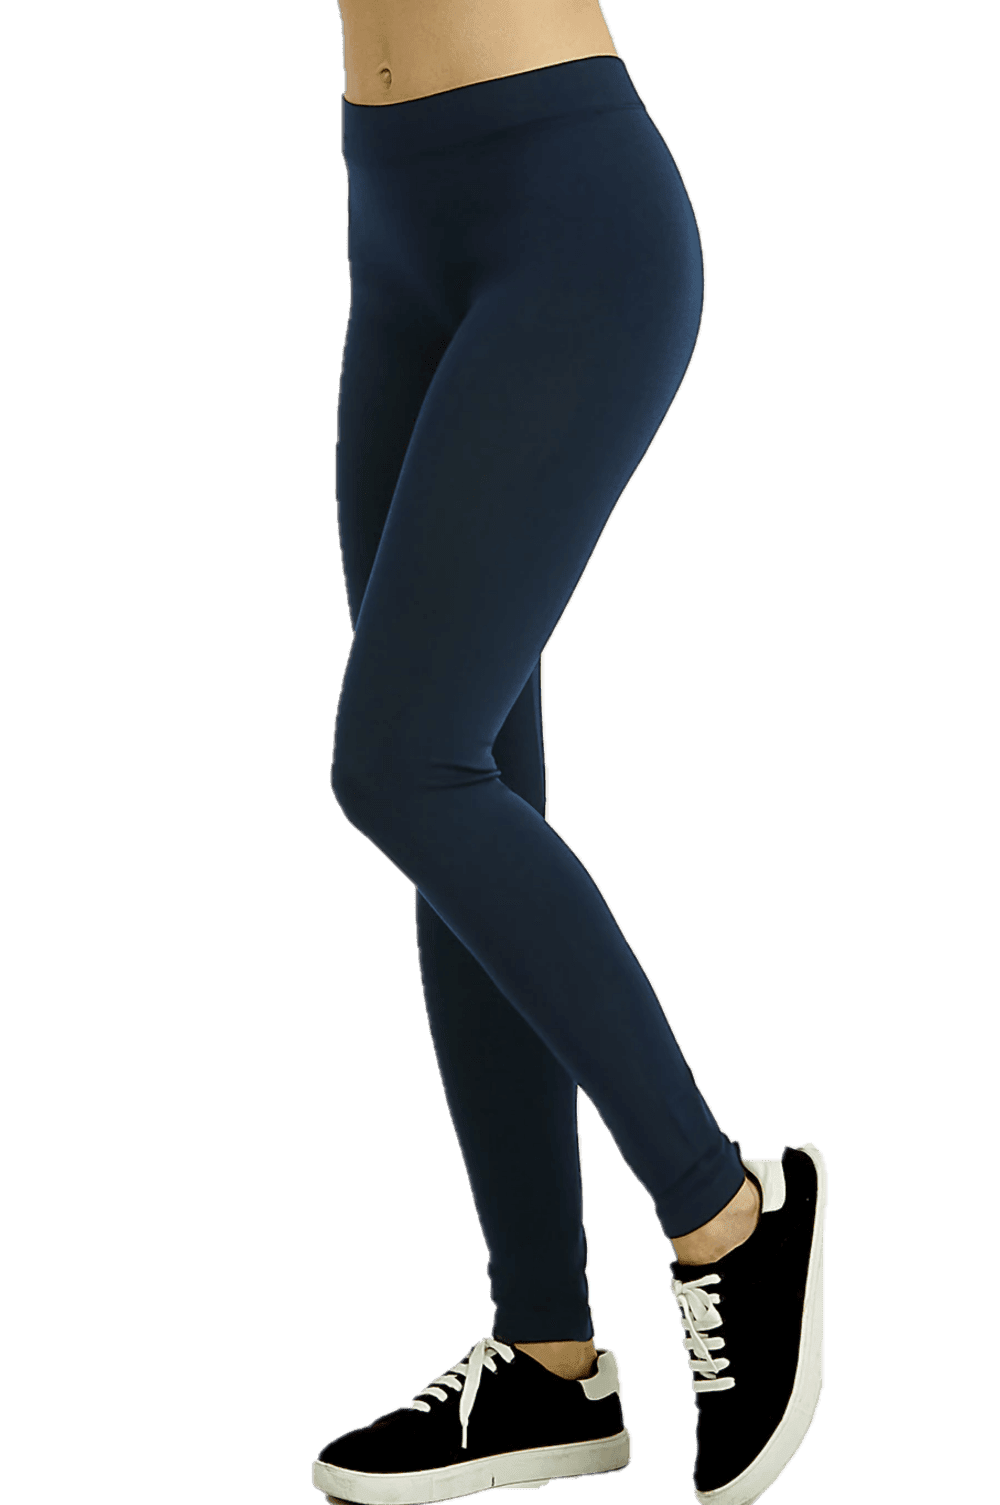 Women's Polyester Full Length Color Leggings, Free Size, Navy, 1 Count, 1  Pack